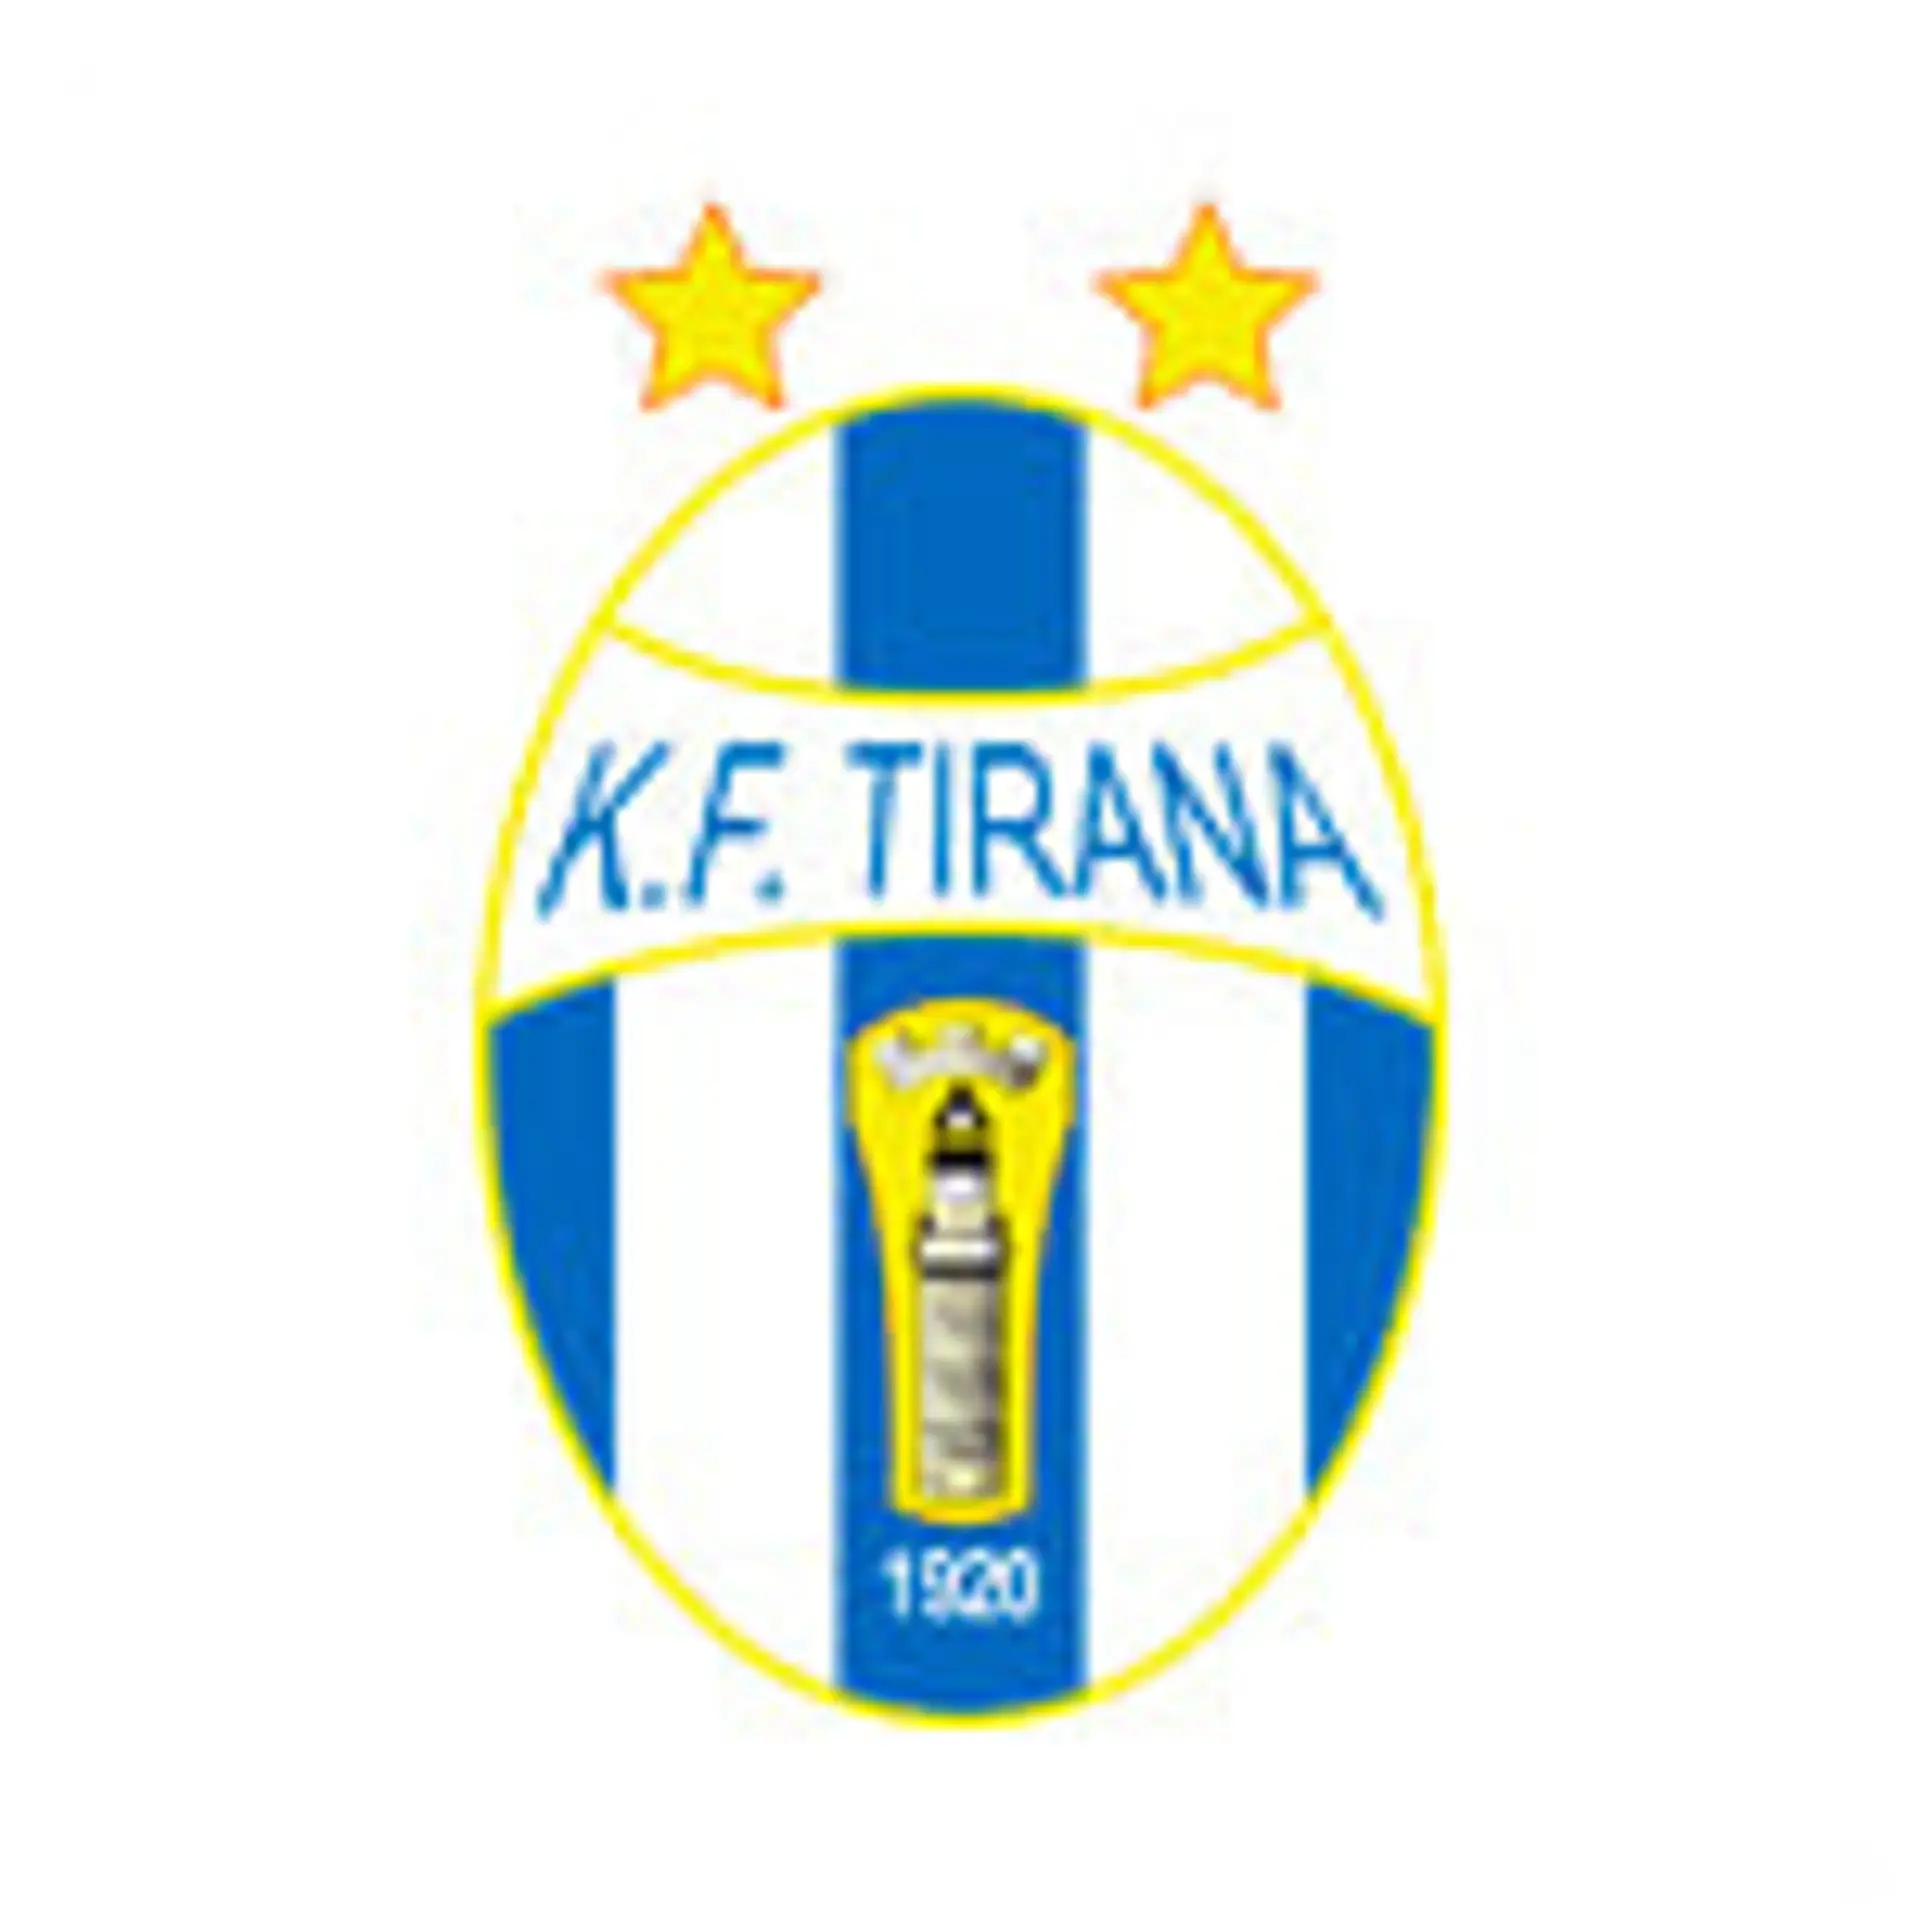 KF Tirana x KS Kastrioti Kruje » Placar ao vivo, Palpites